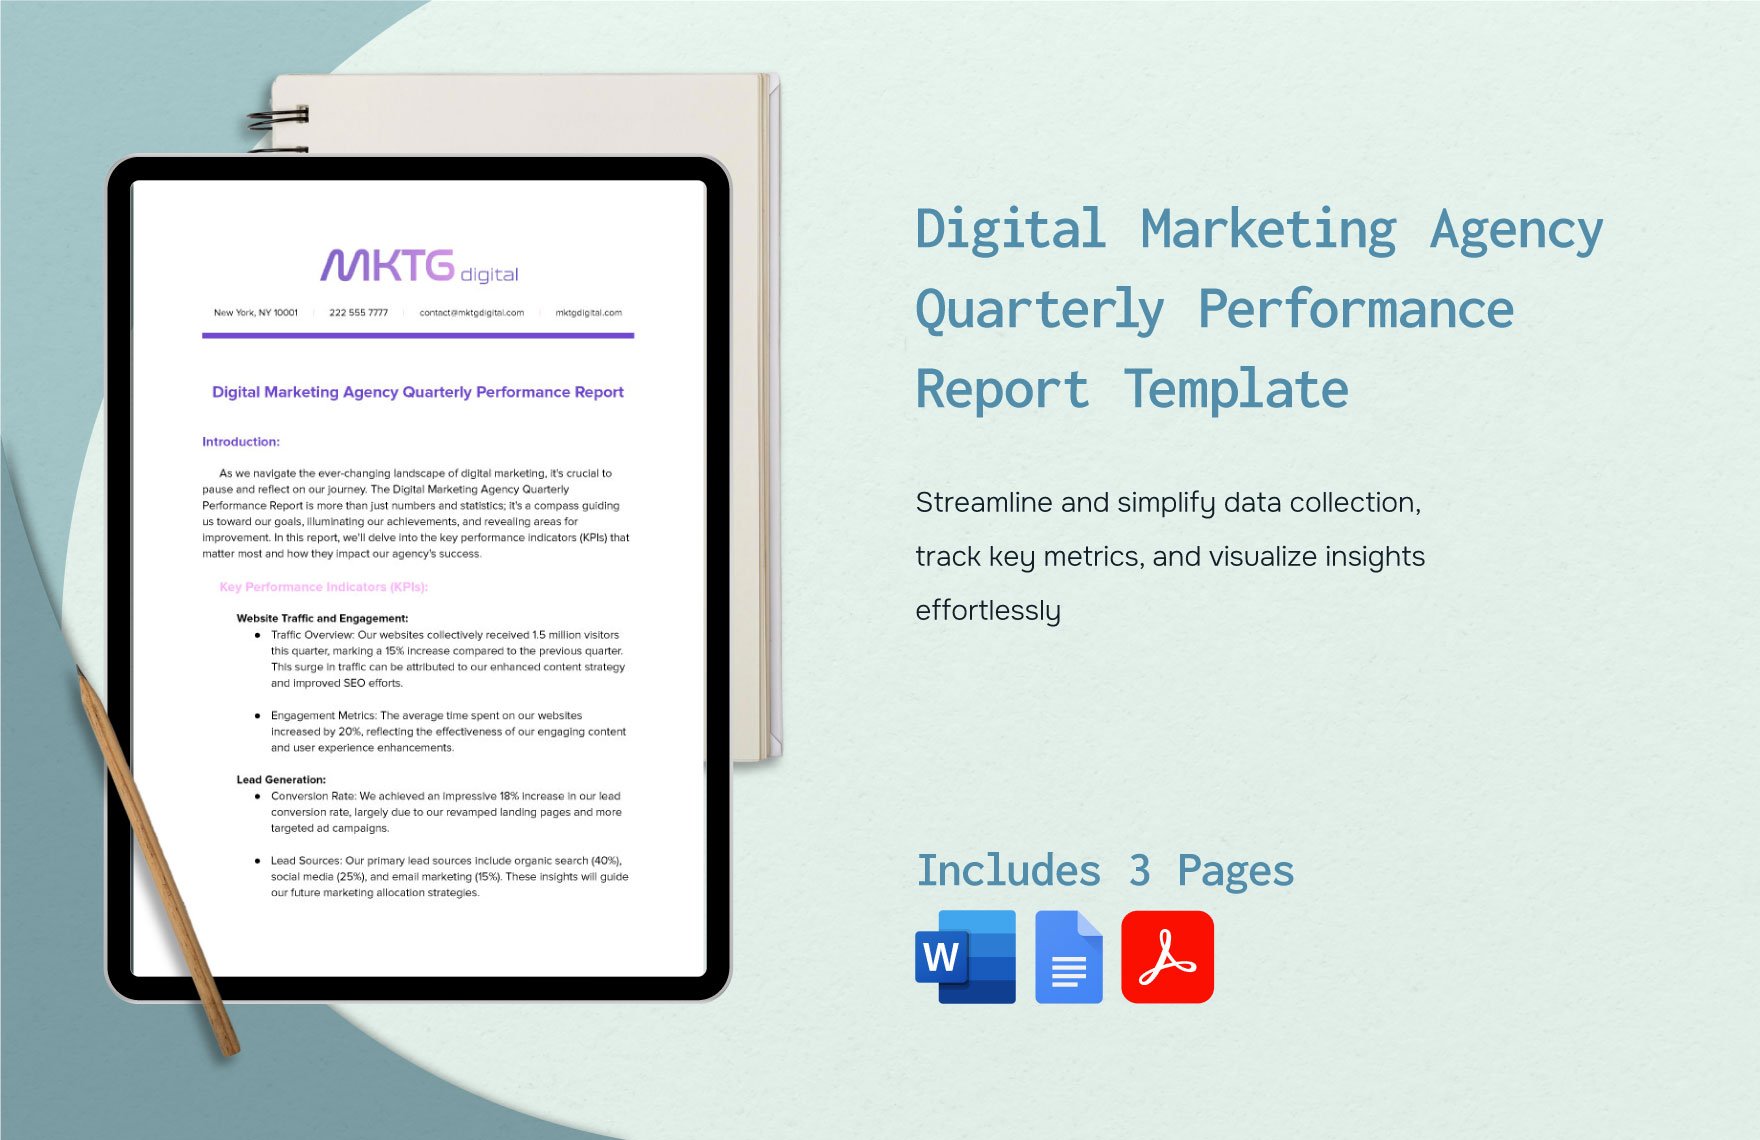 Digital Marketing Agency Quarterly Performance Report Template